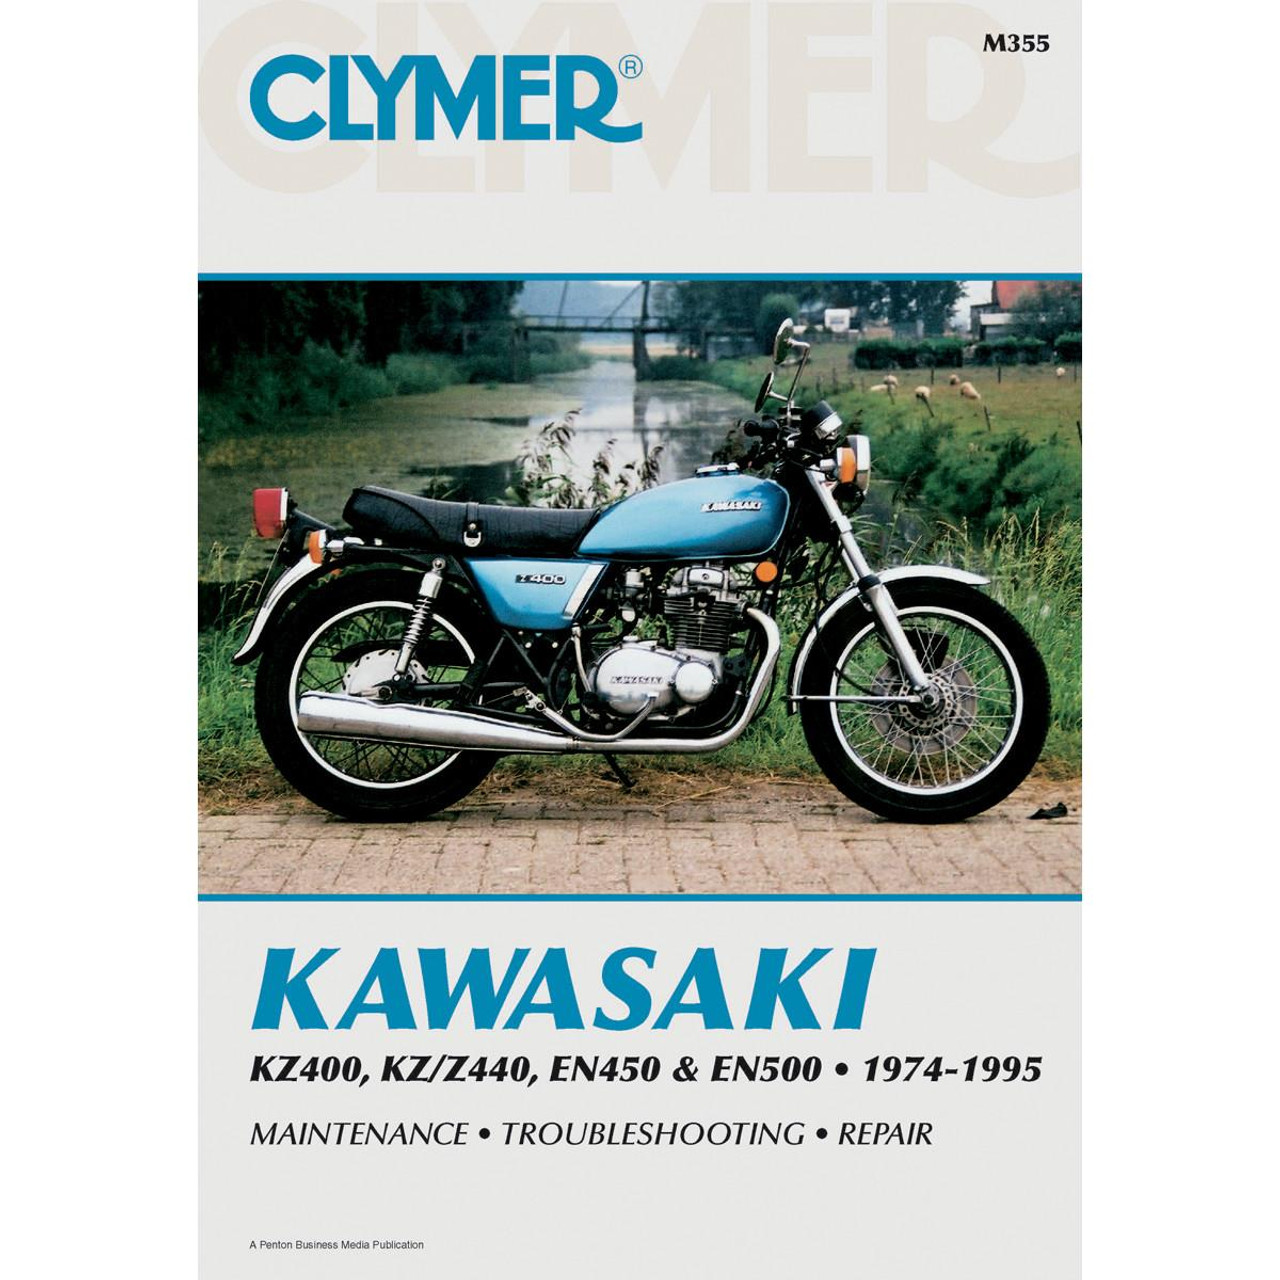 Clymer New Manual - Kawasaki Kz400 To En500, M355